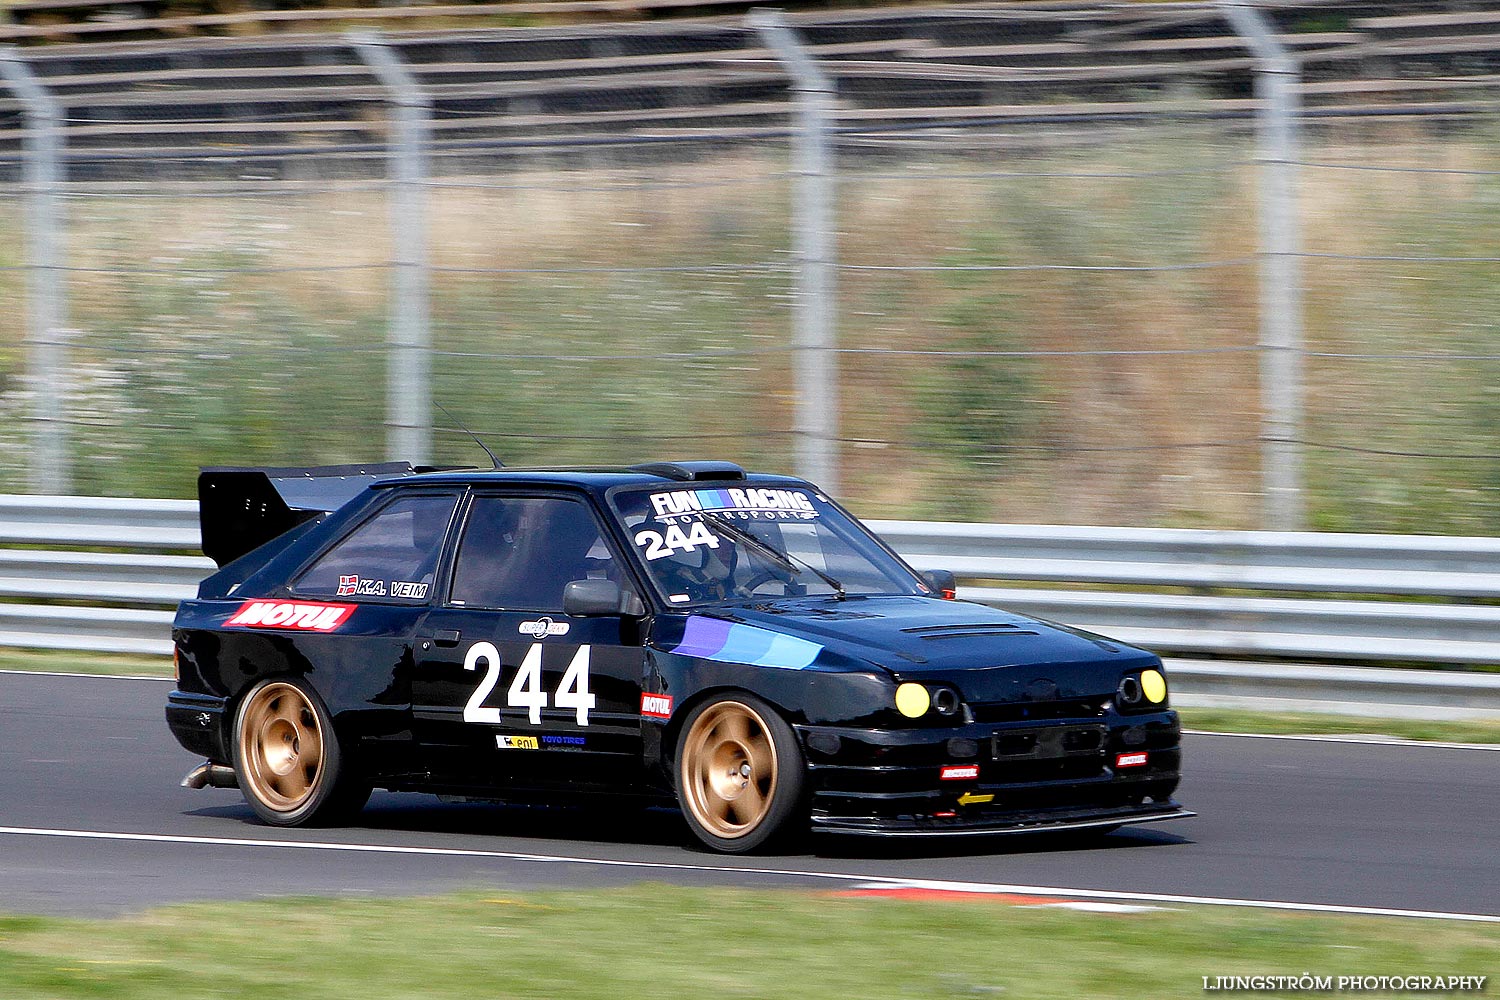 SSK Raceweek,mix,Kinnekulle Ring,Götene,Sverige,Motorsport,,2014,90410